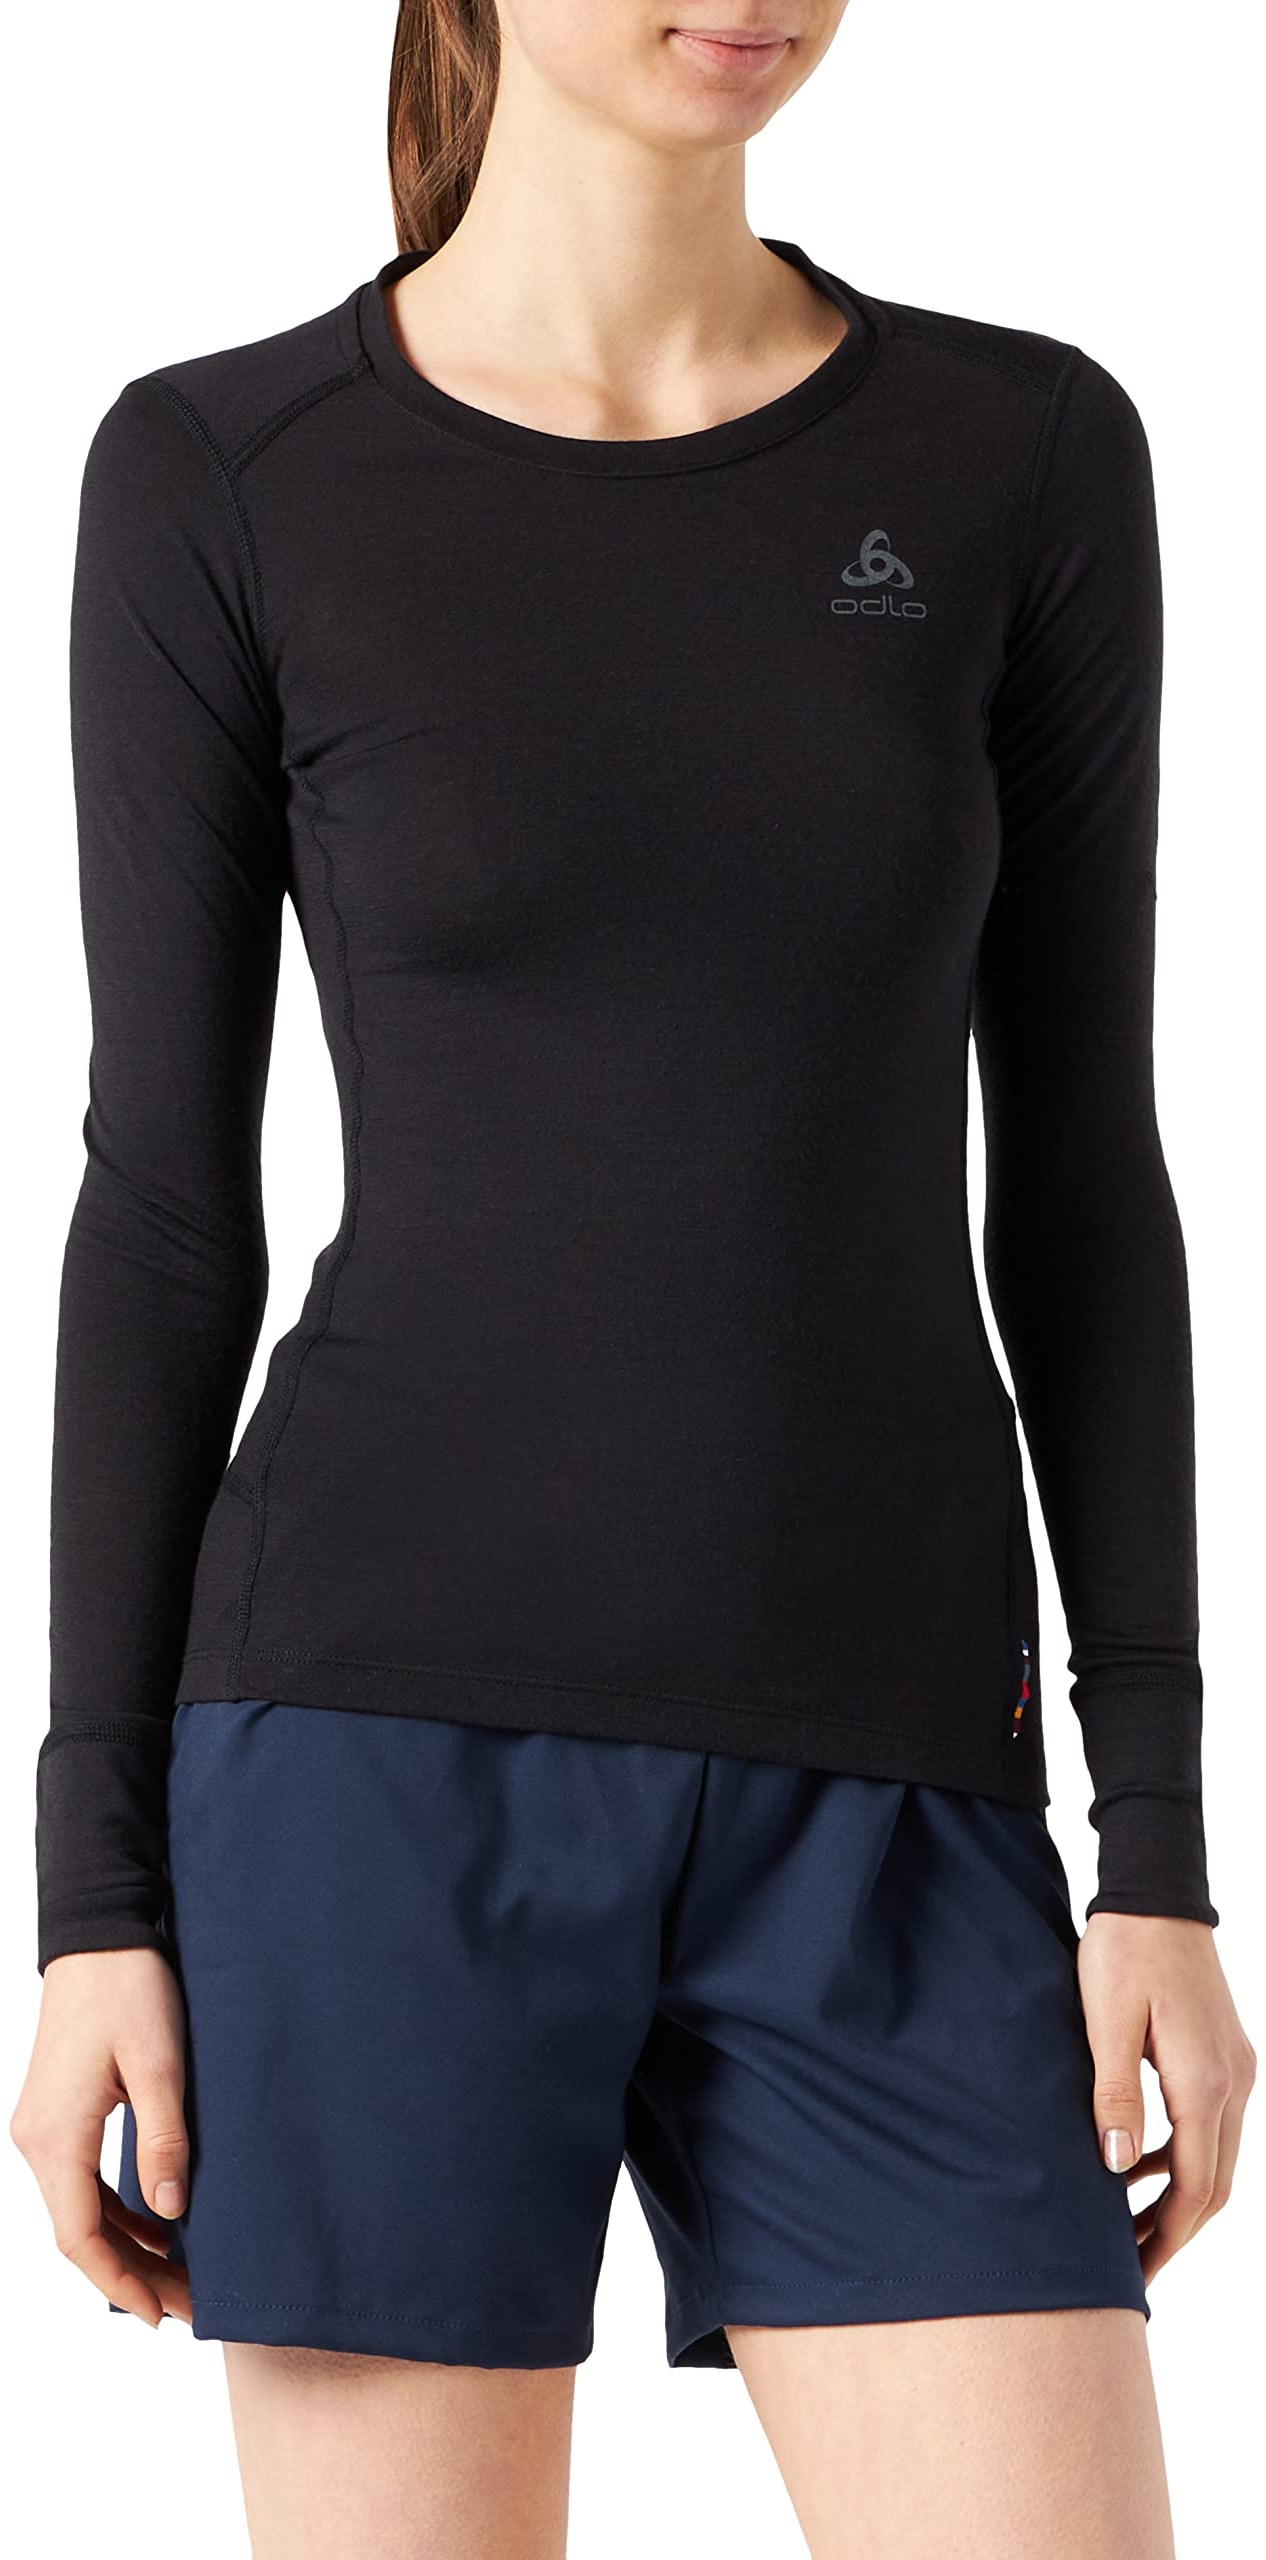 Odlo Damen Funktionsunterwäsche Langarm Shirt 100% MERINO 200 GRAMM, black - black, L